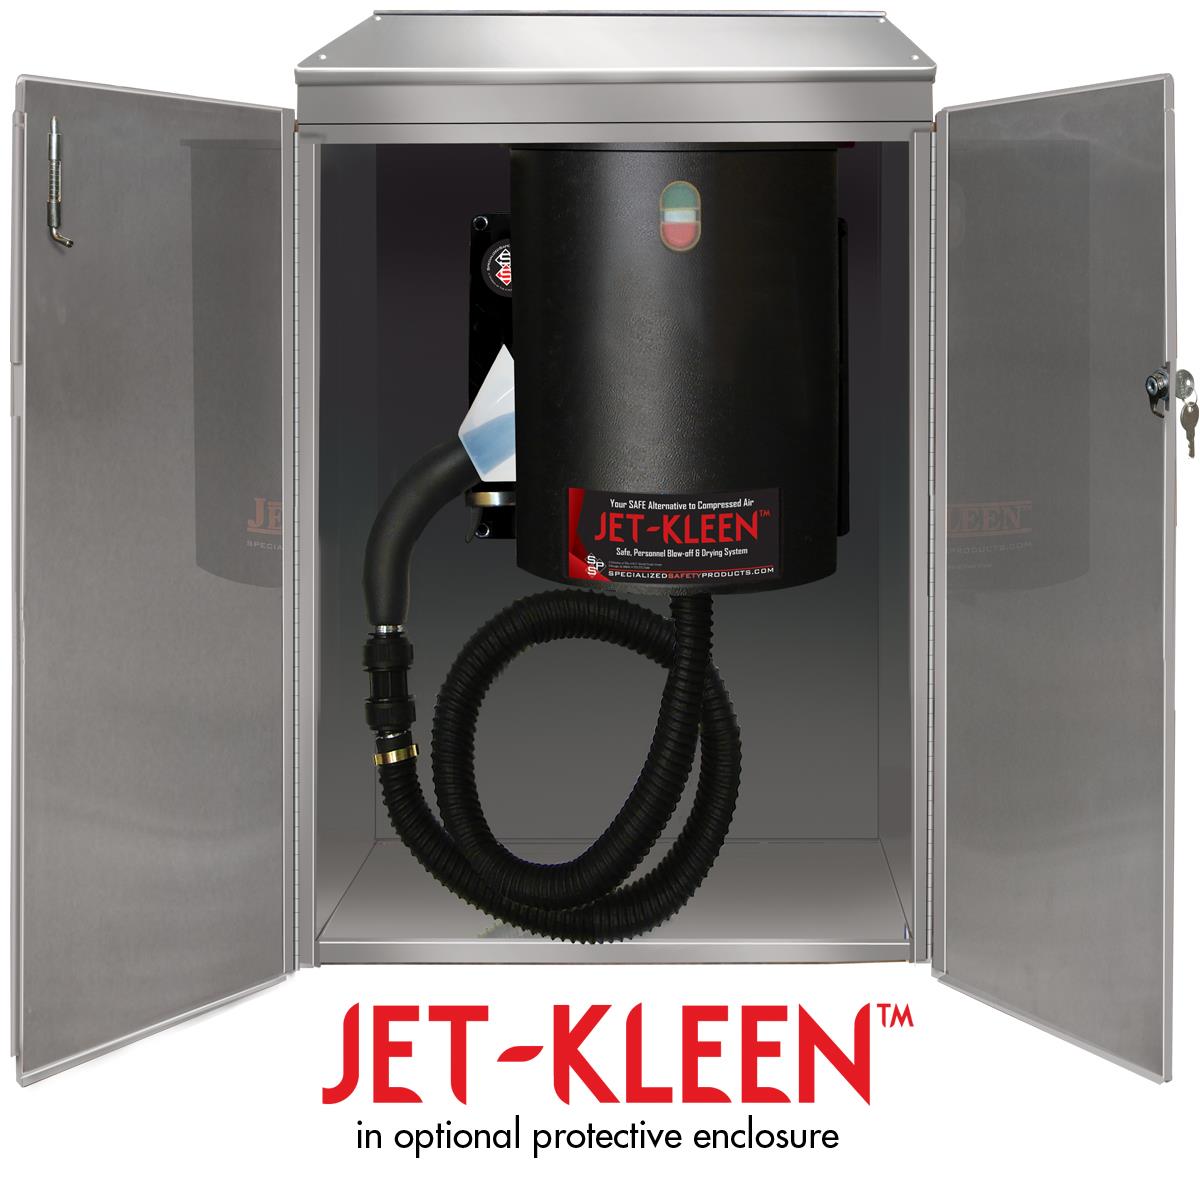 Jet-Kleen with Enclosure